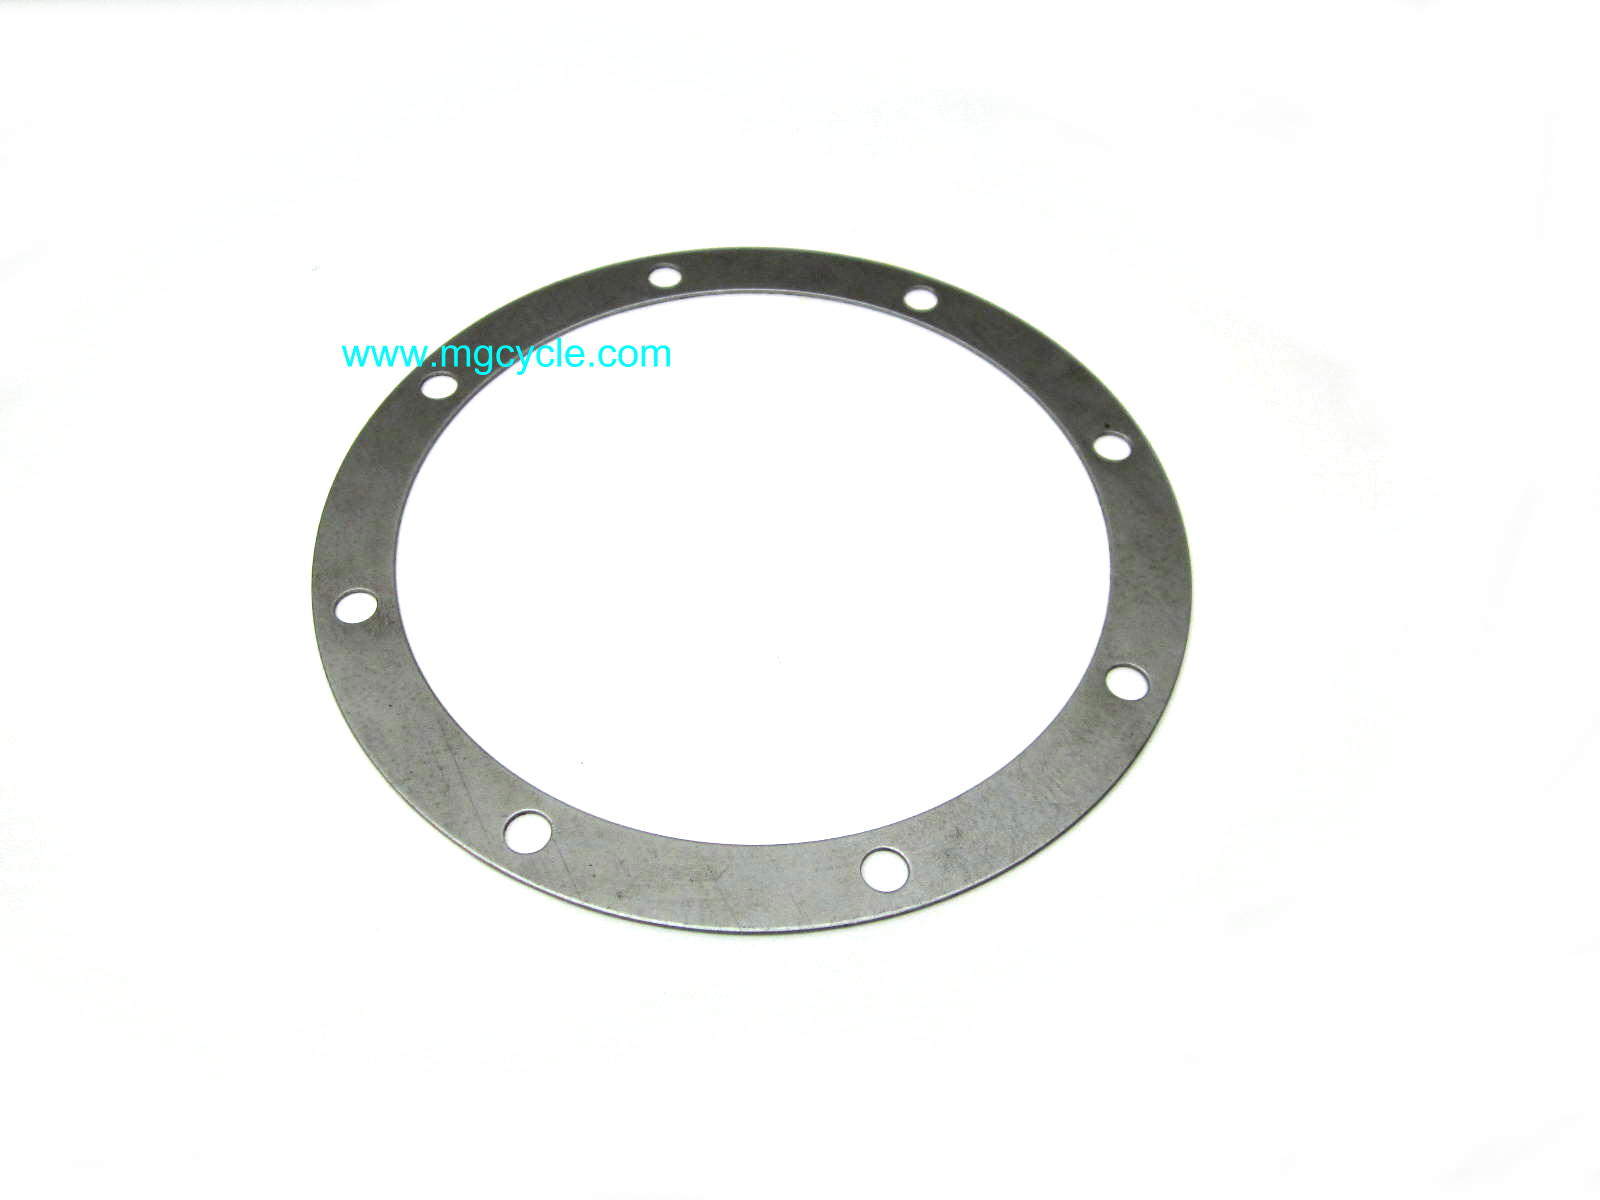 Rear drive box shim, large, Disc brake 1.1 mm GU17355406